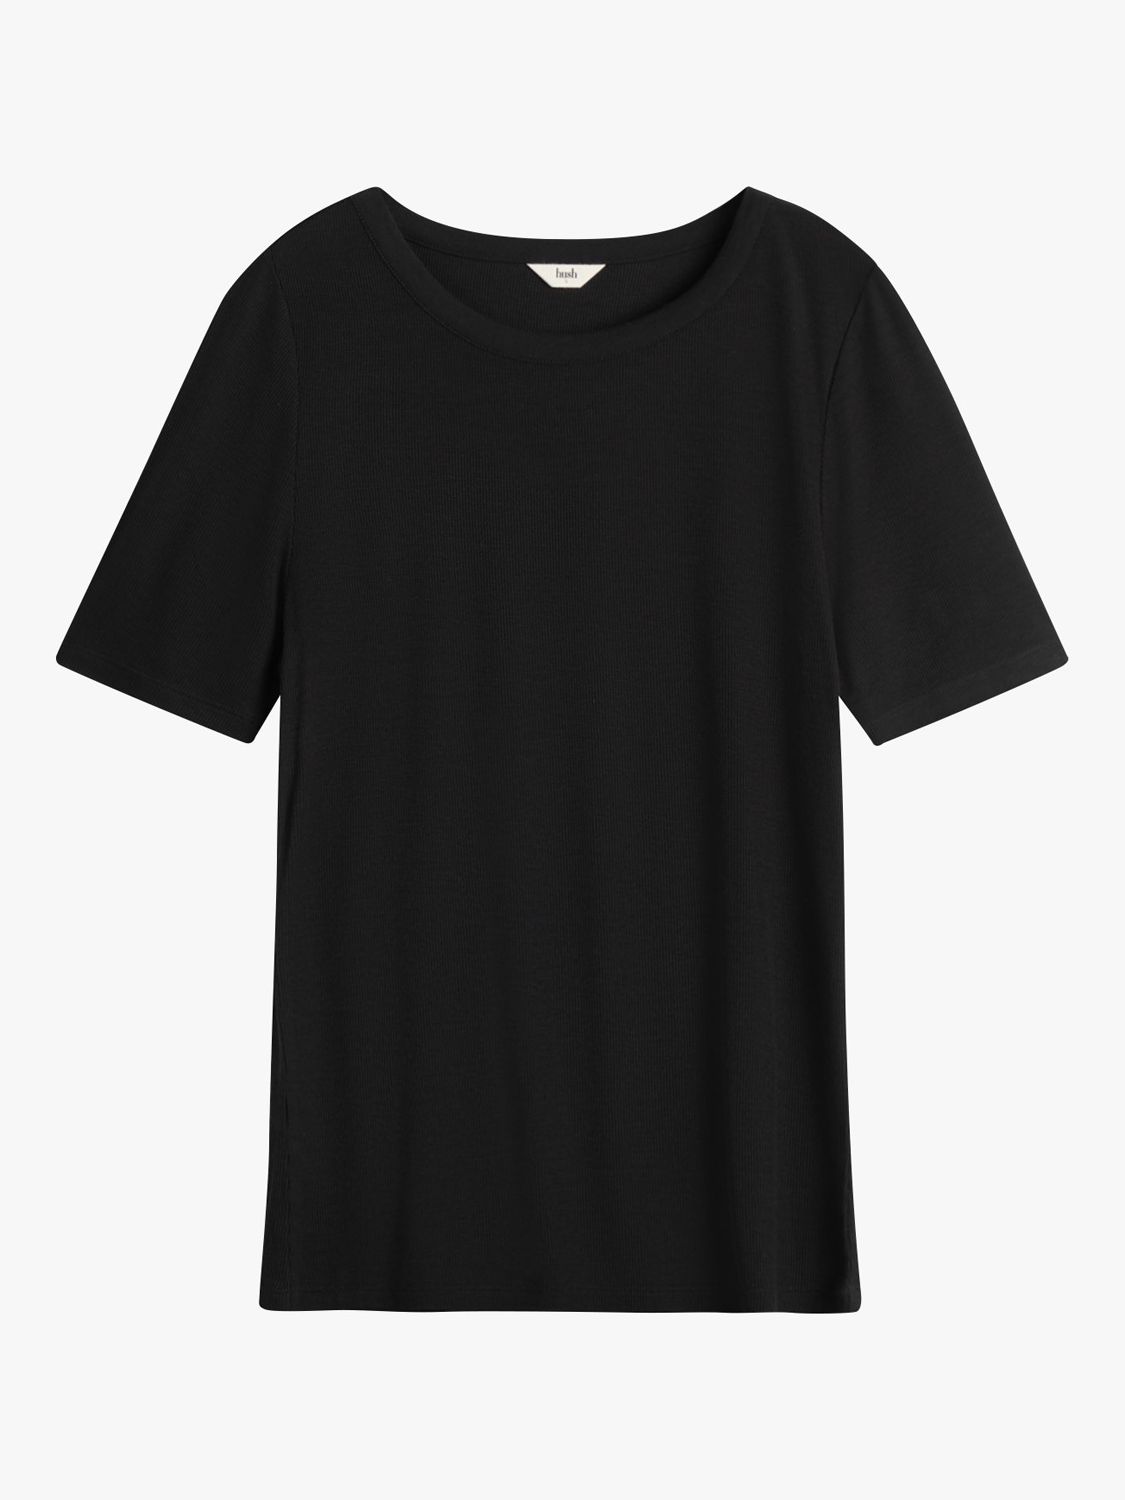 HUSH Lara Slim Fitted T-Shirt, Black at John Lewis & Partners